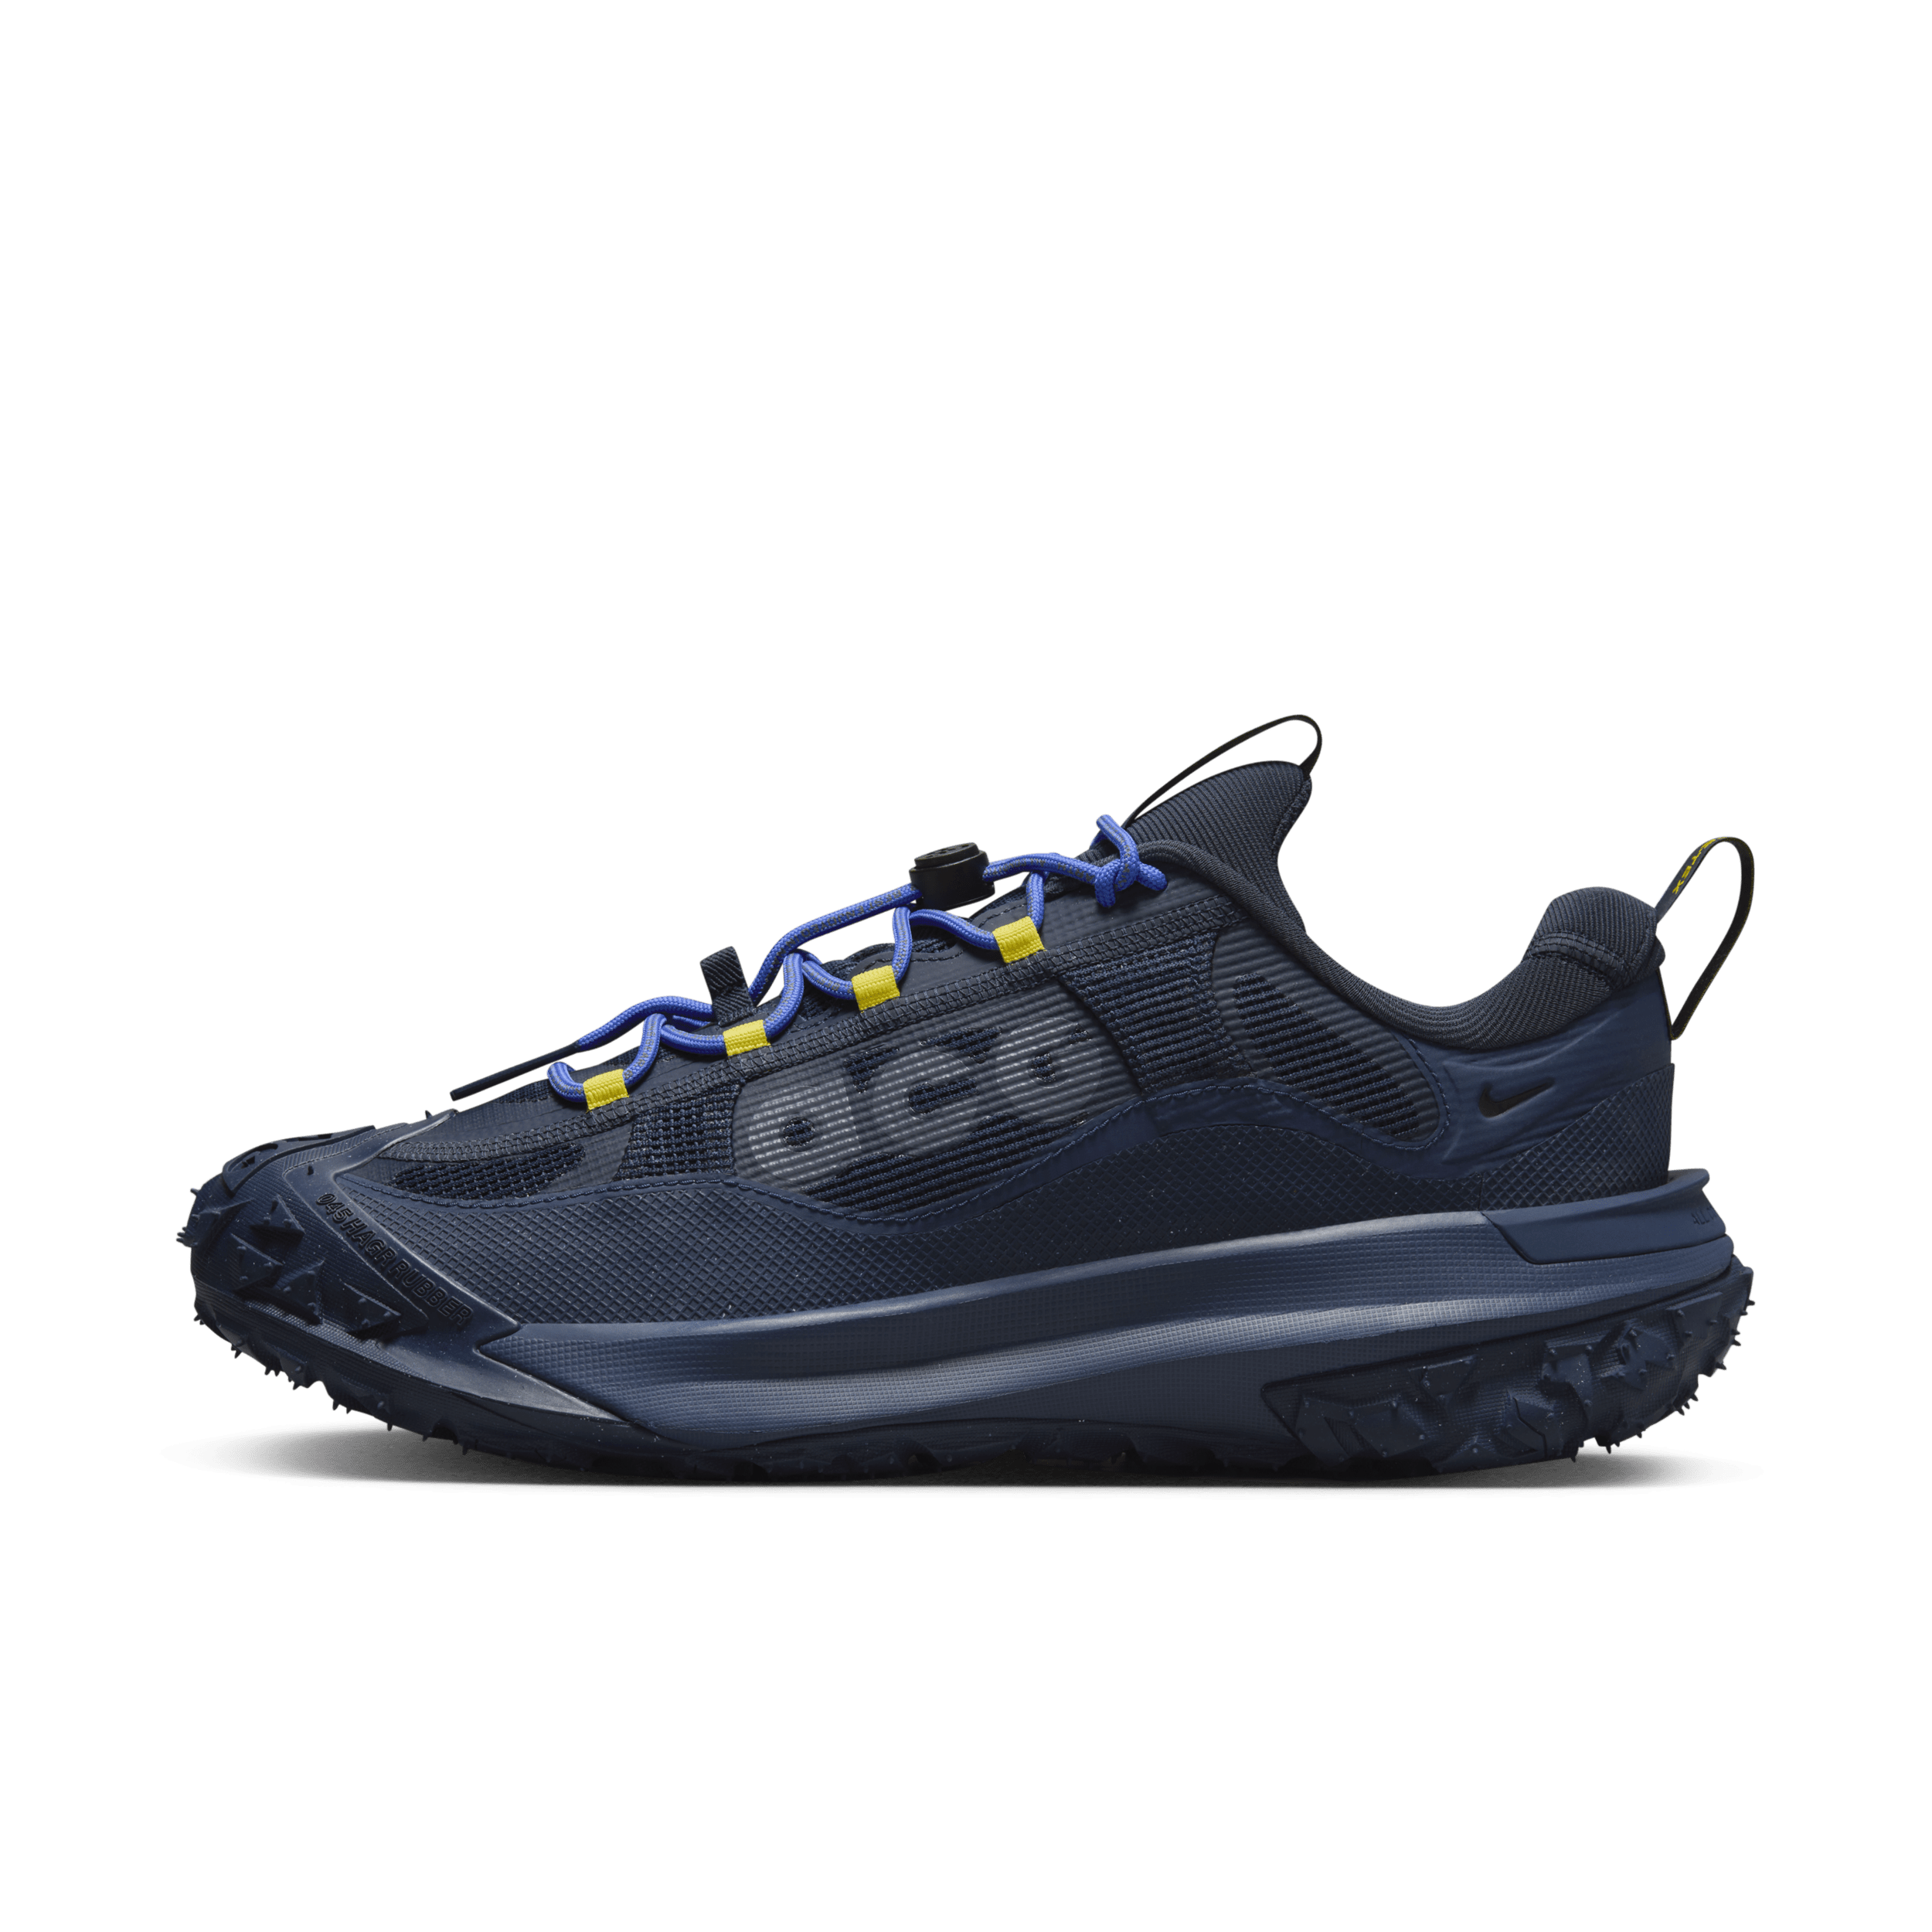 Scarpa Nike ACG Mountain Fly 2 Low GORE-TEX – Uomo - Blu